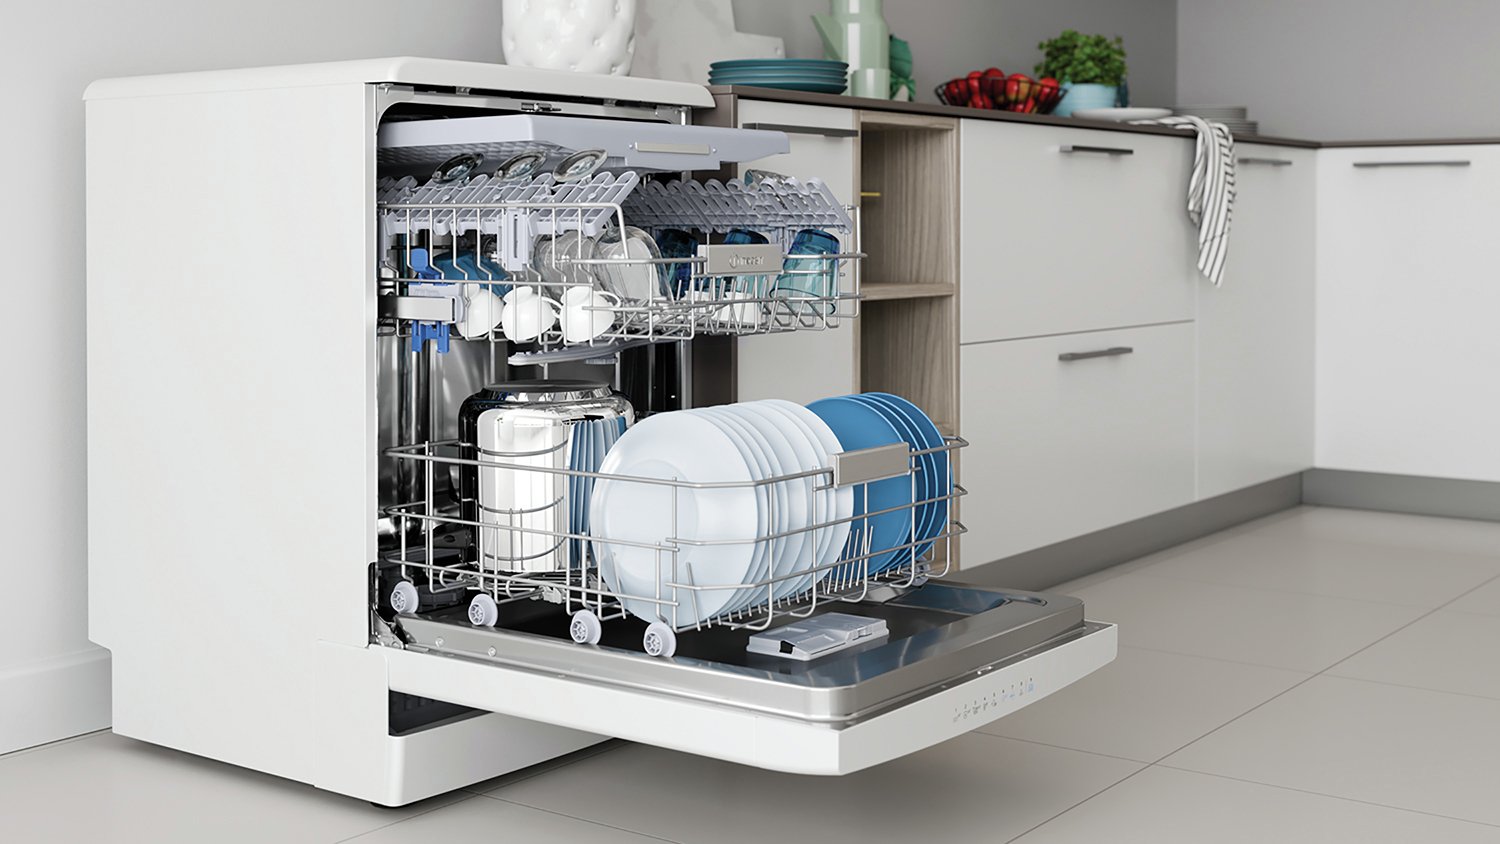 Indesit DFO3T133FUK Full Size Dishwasher Review